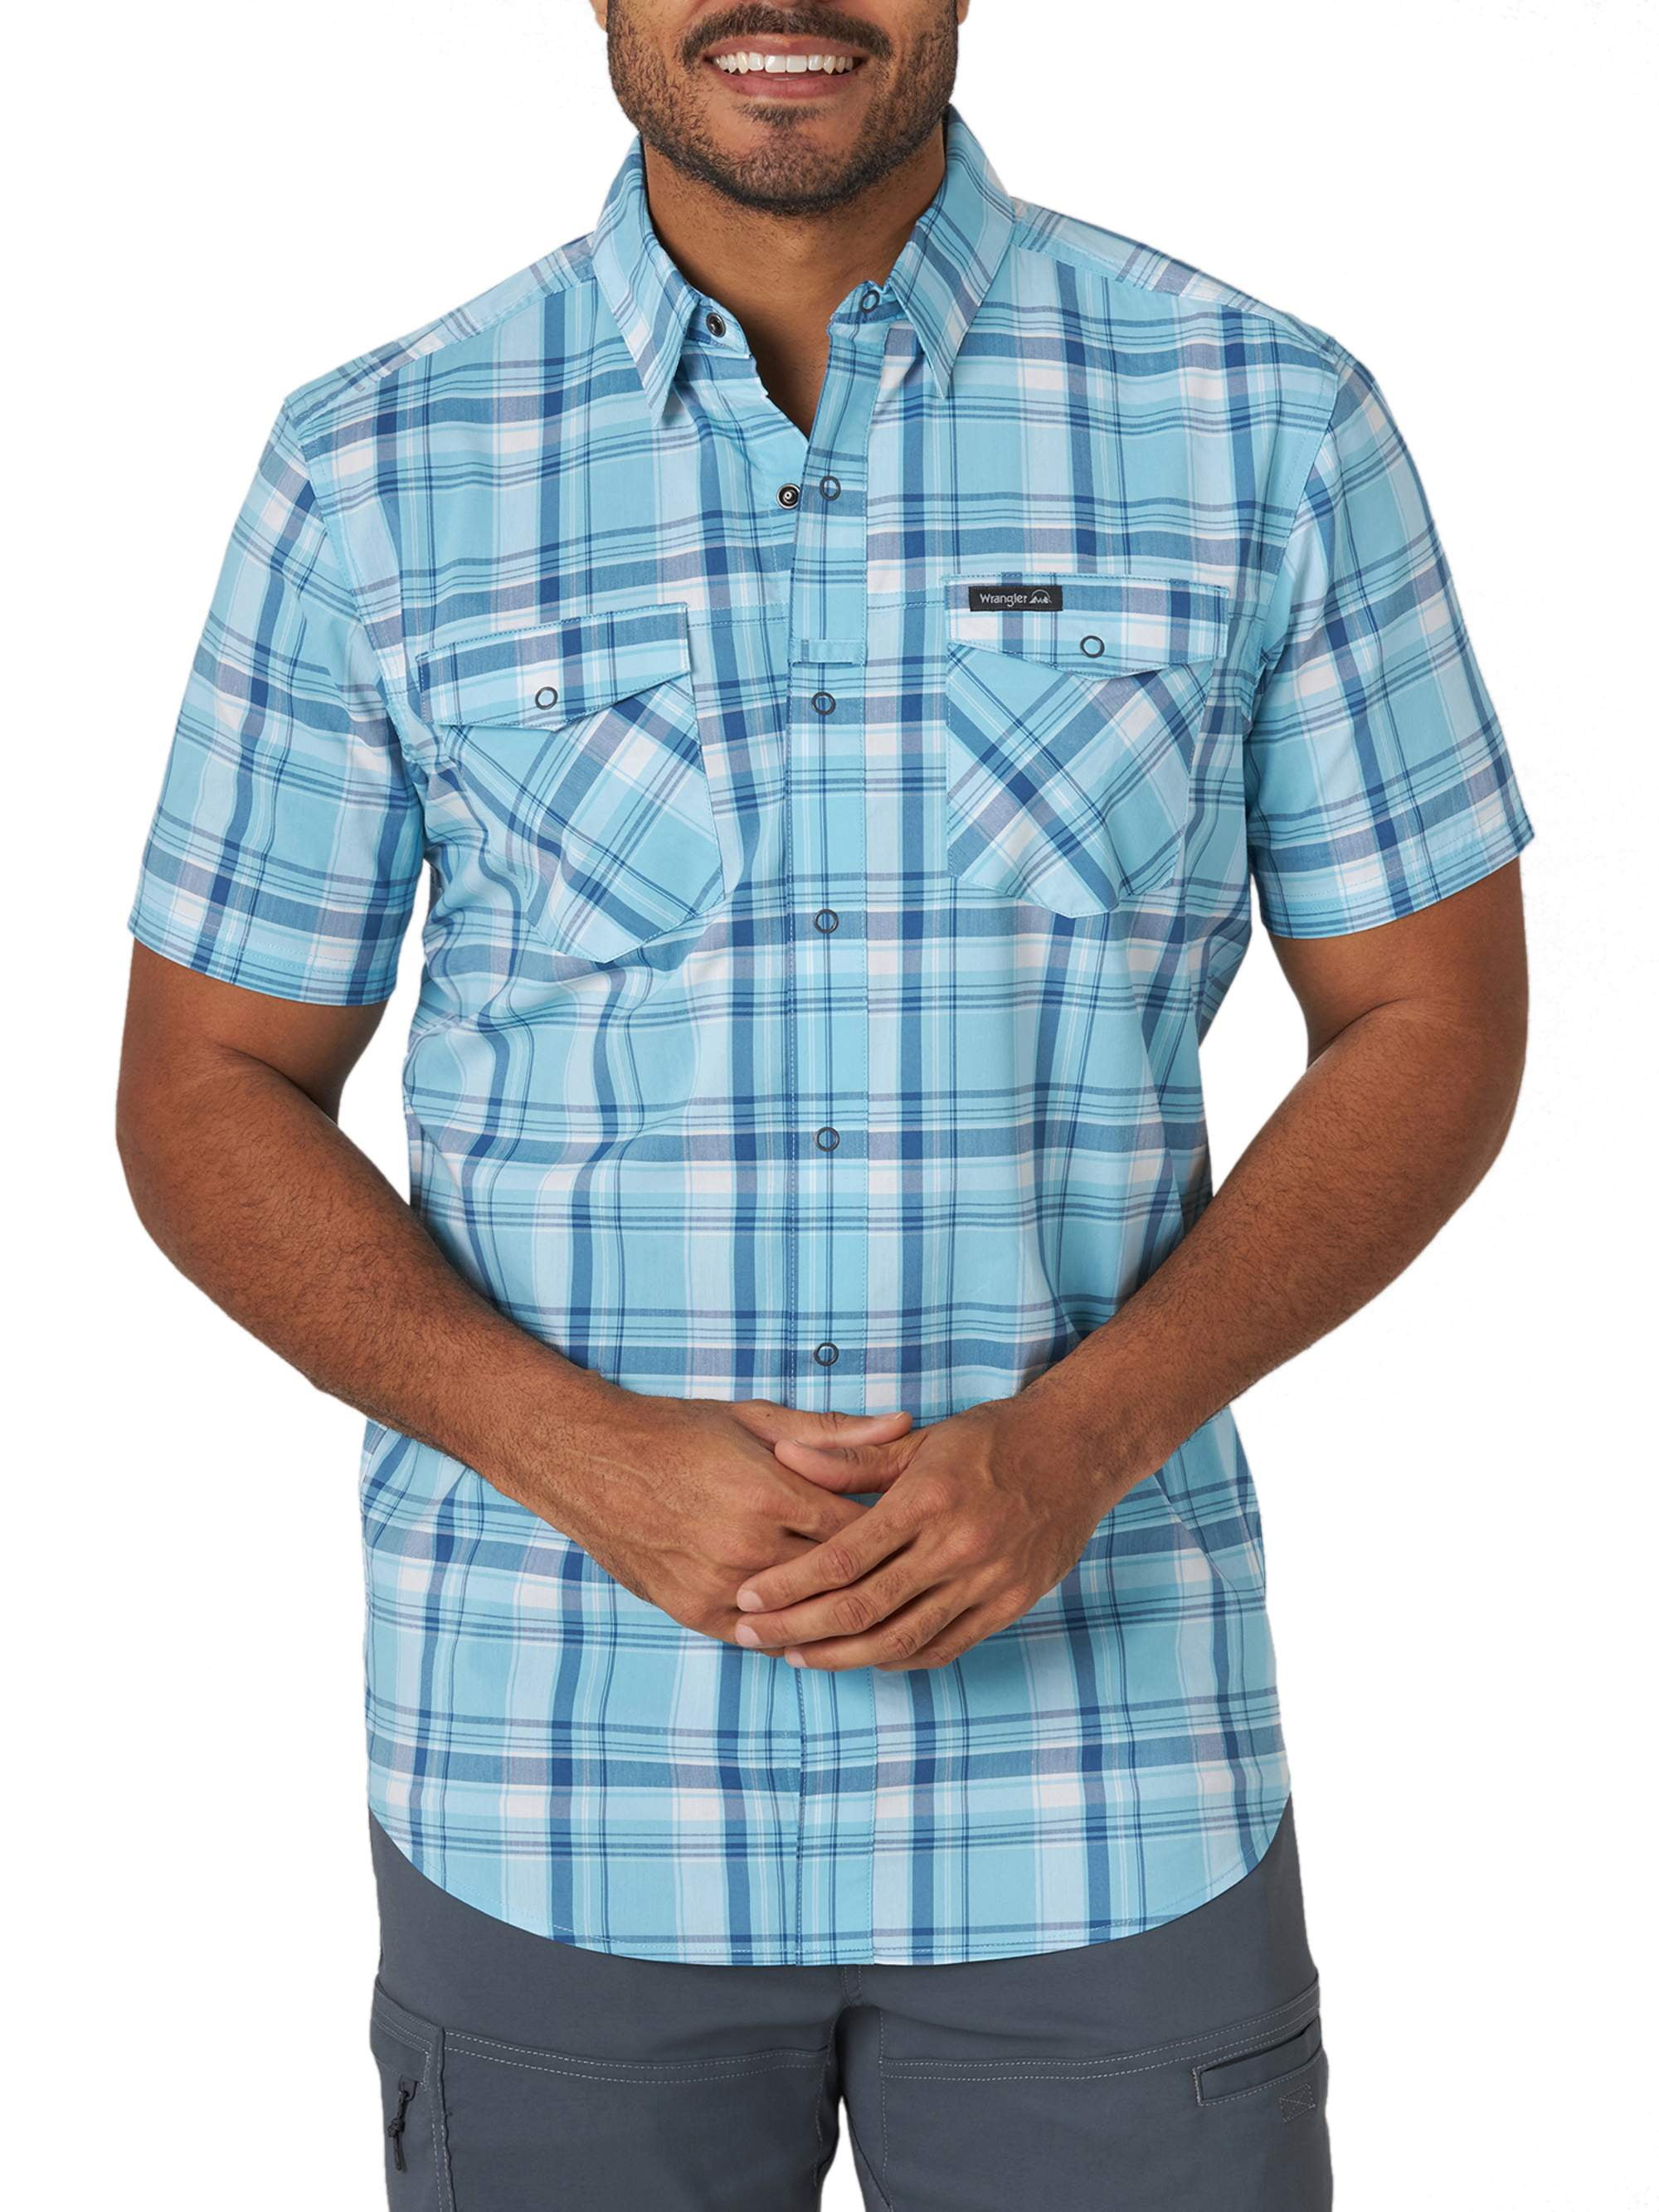 Wrangler Men's Short Sleeve Outdoor Utility Shirt - Walmart.com